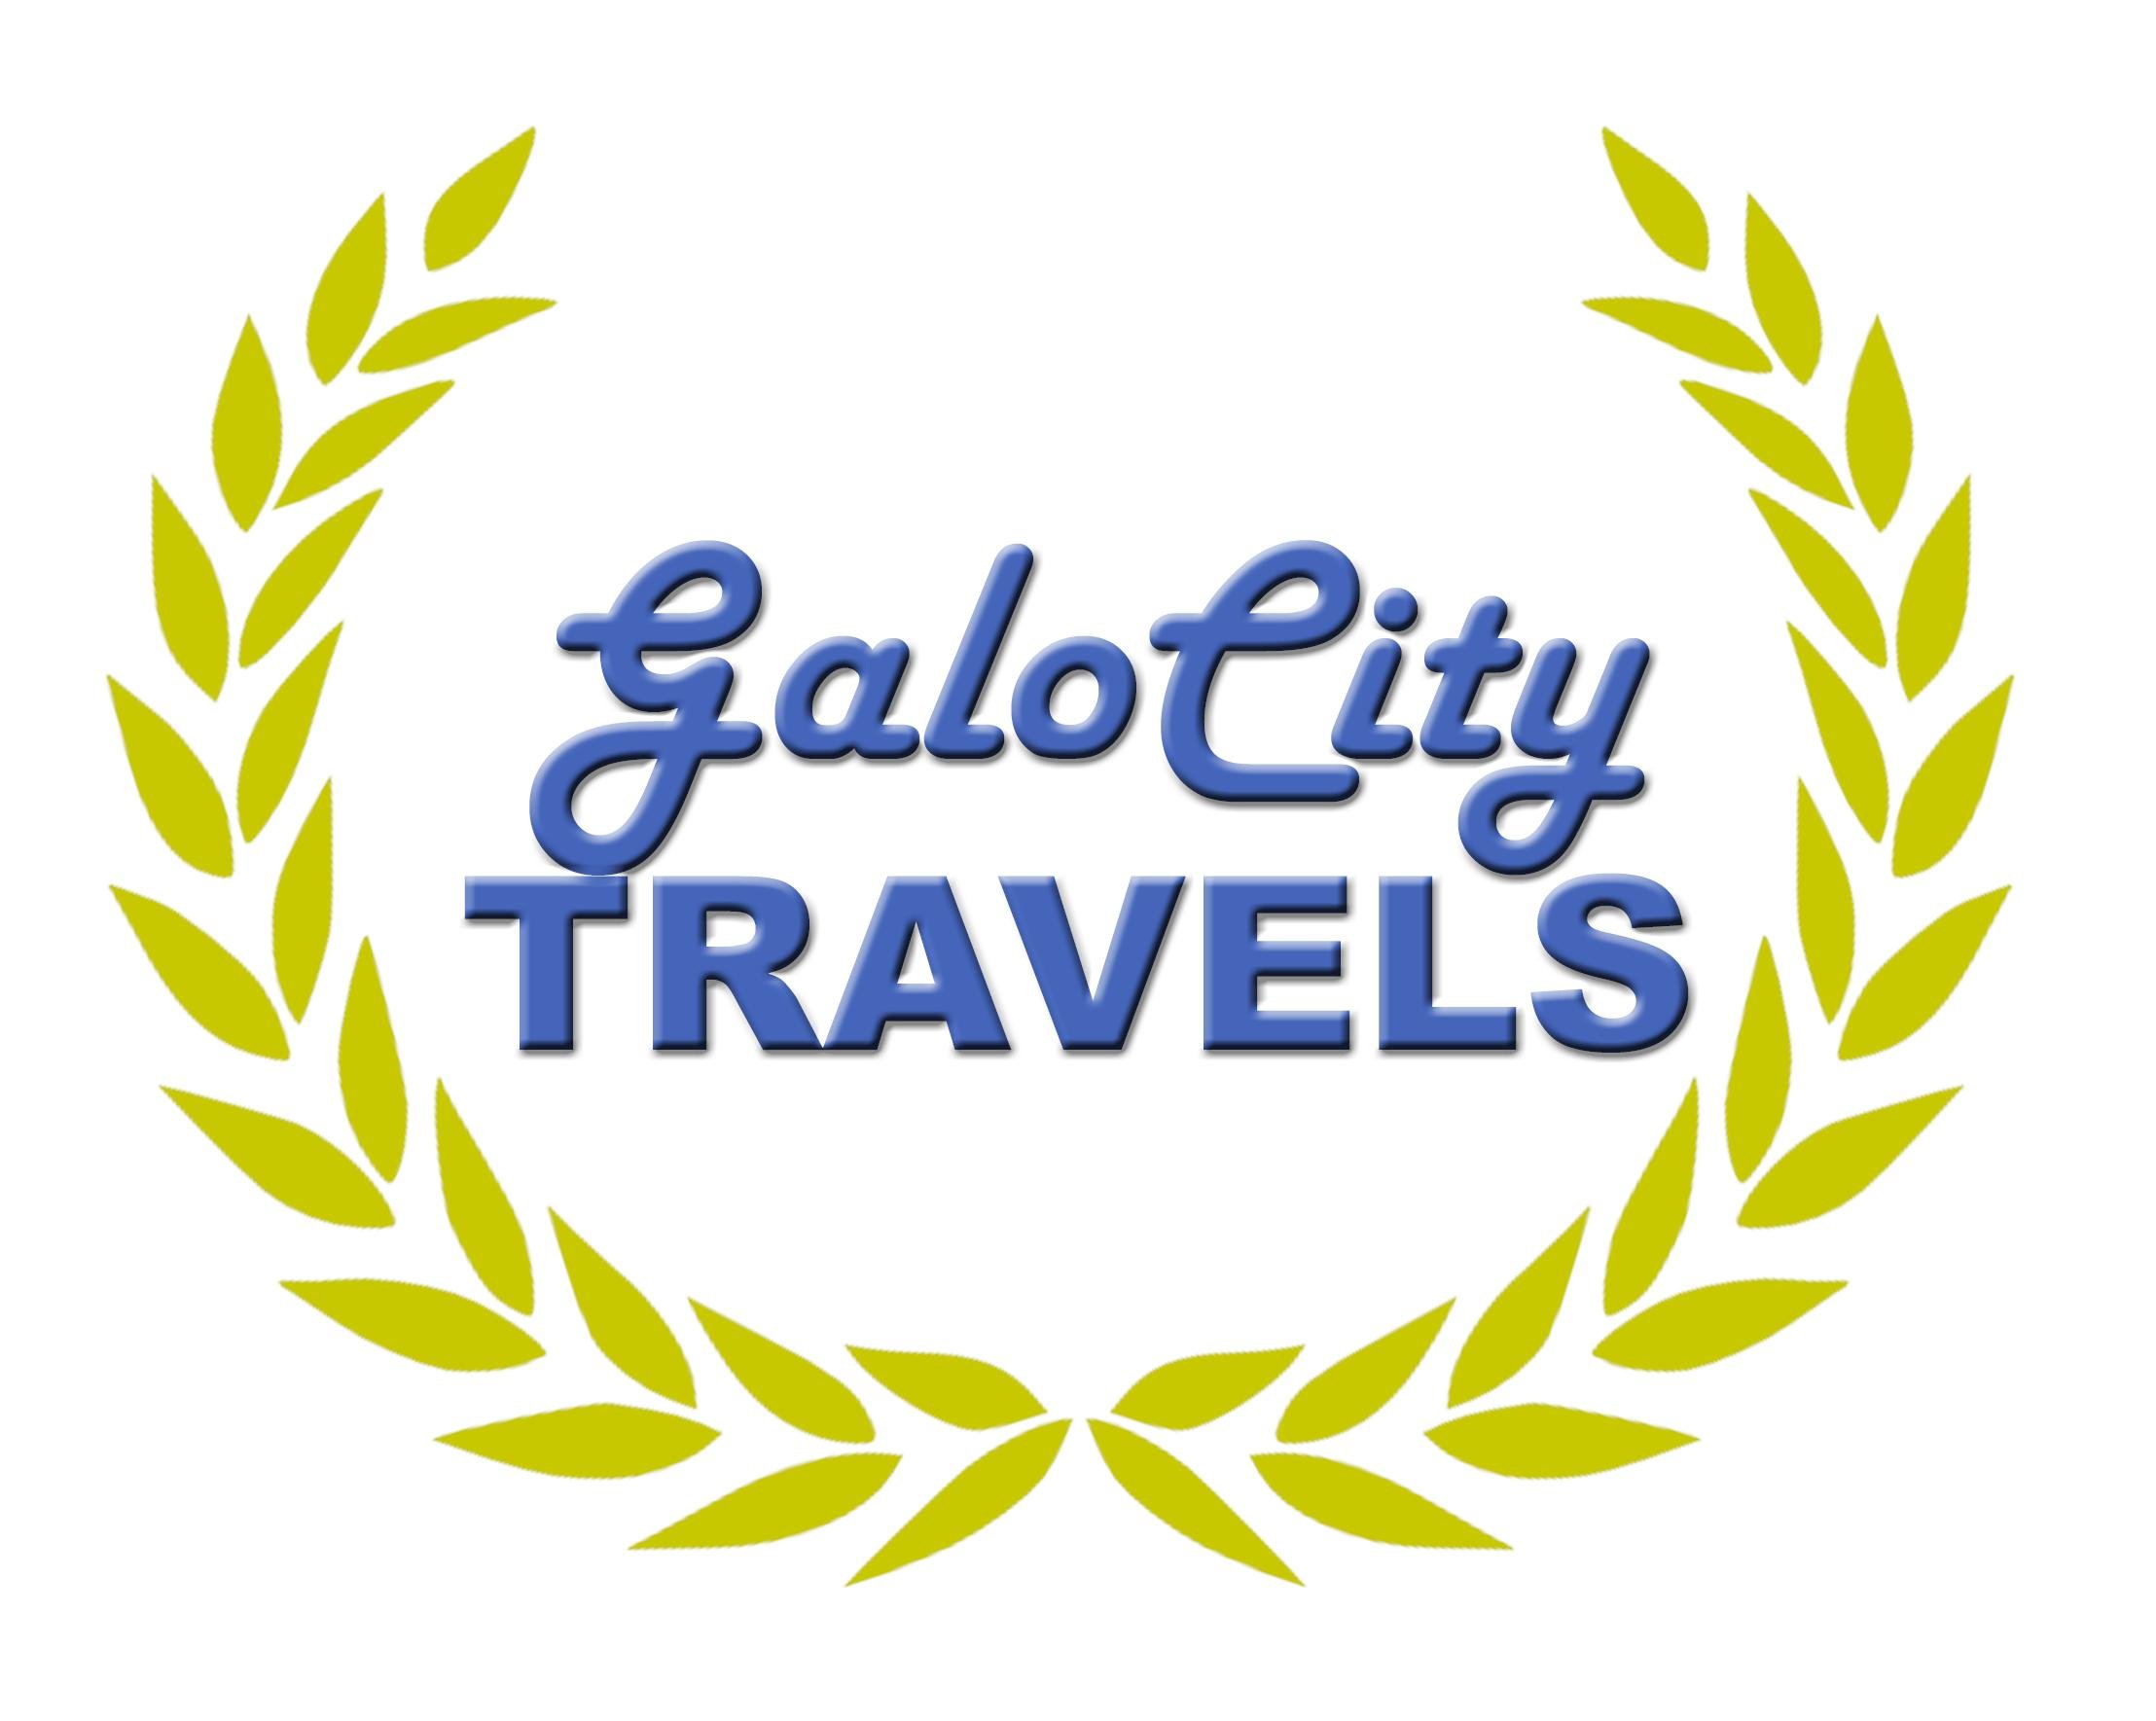 Galocity Travels